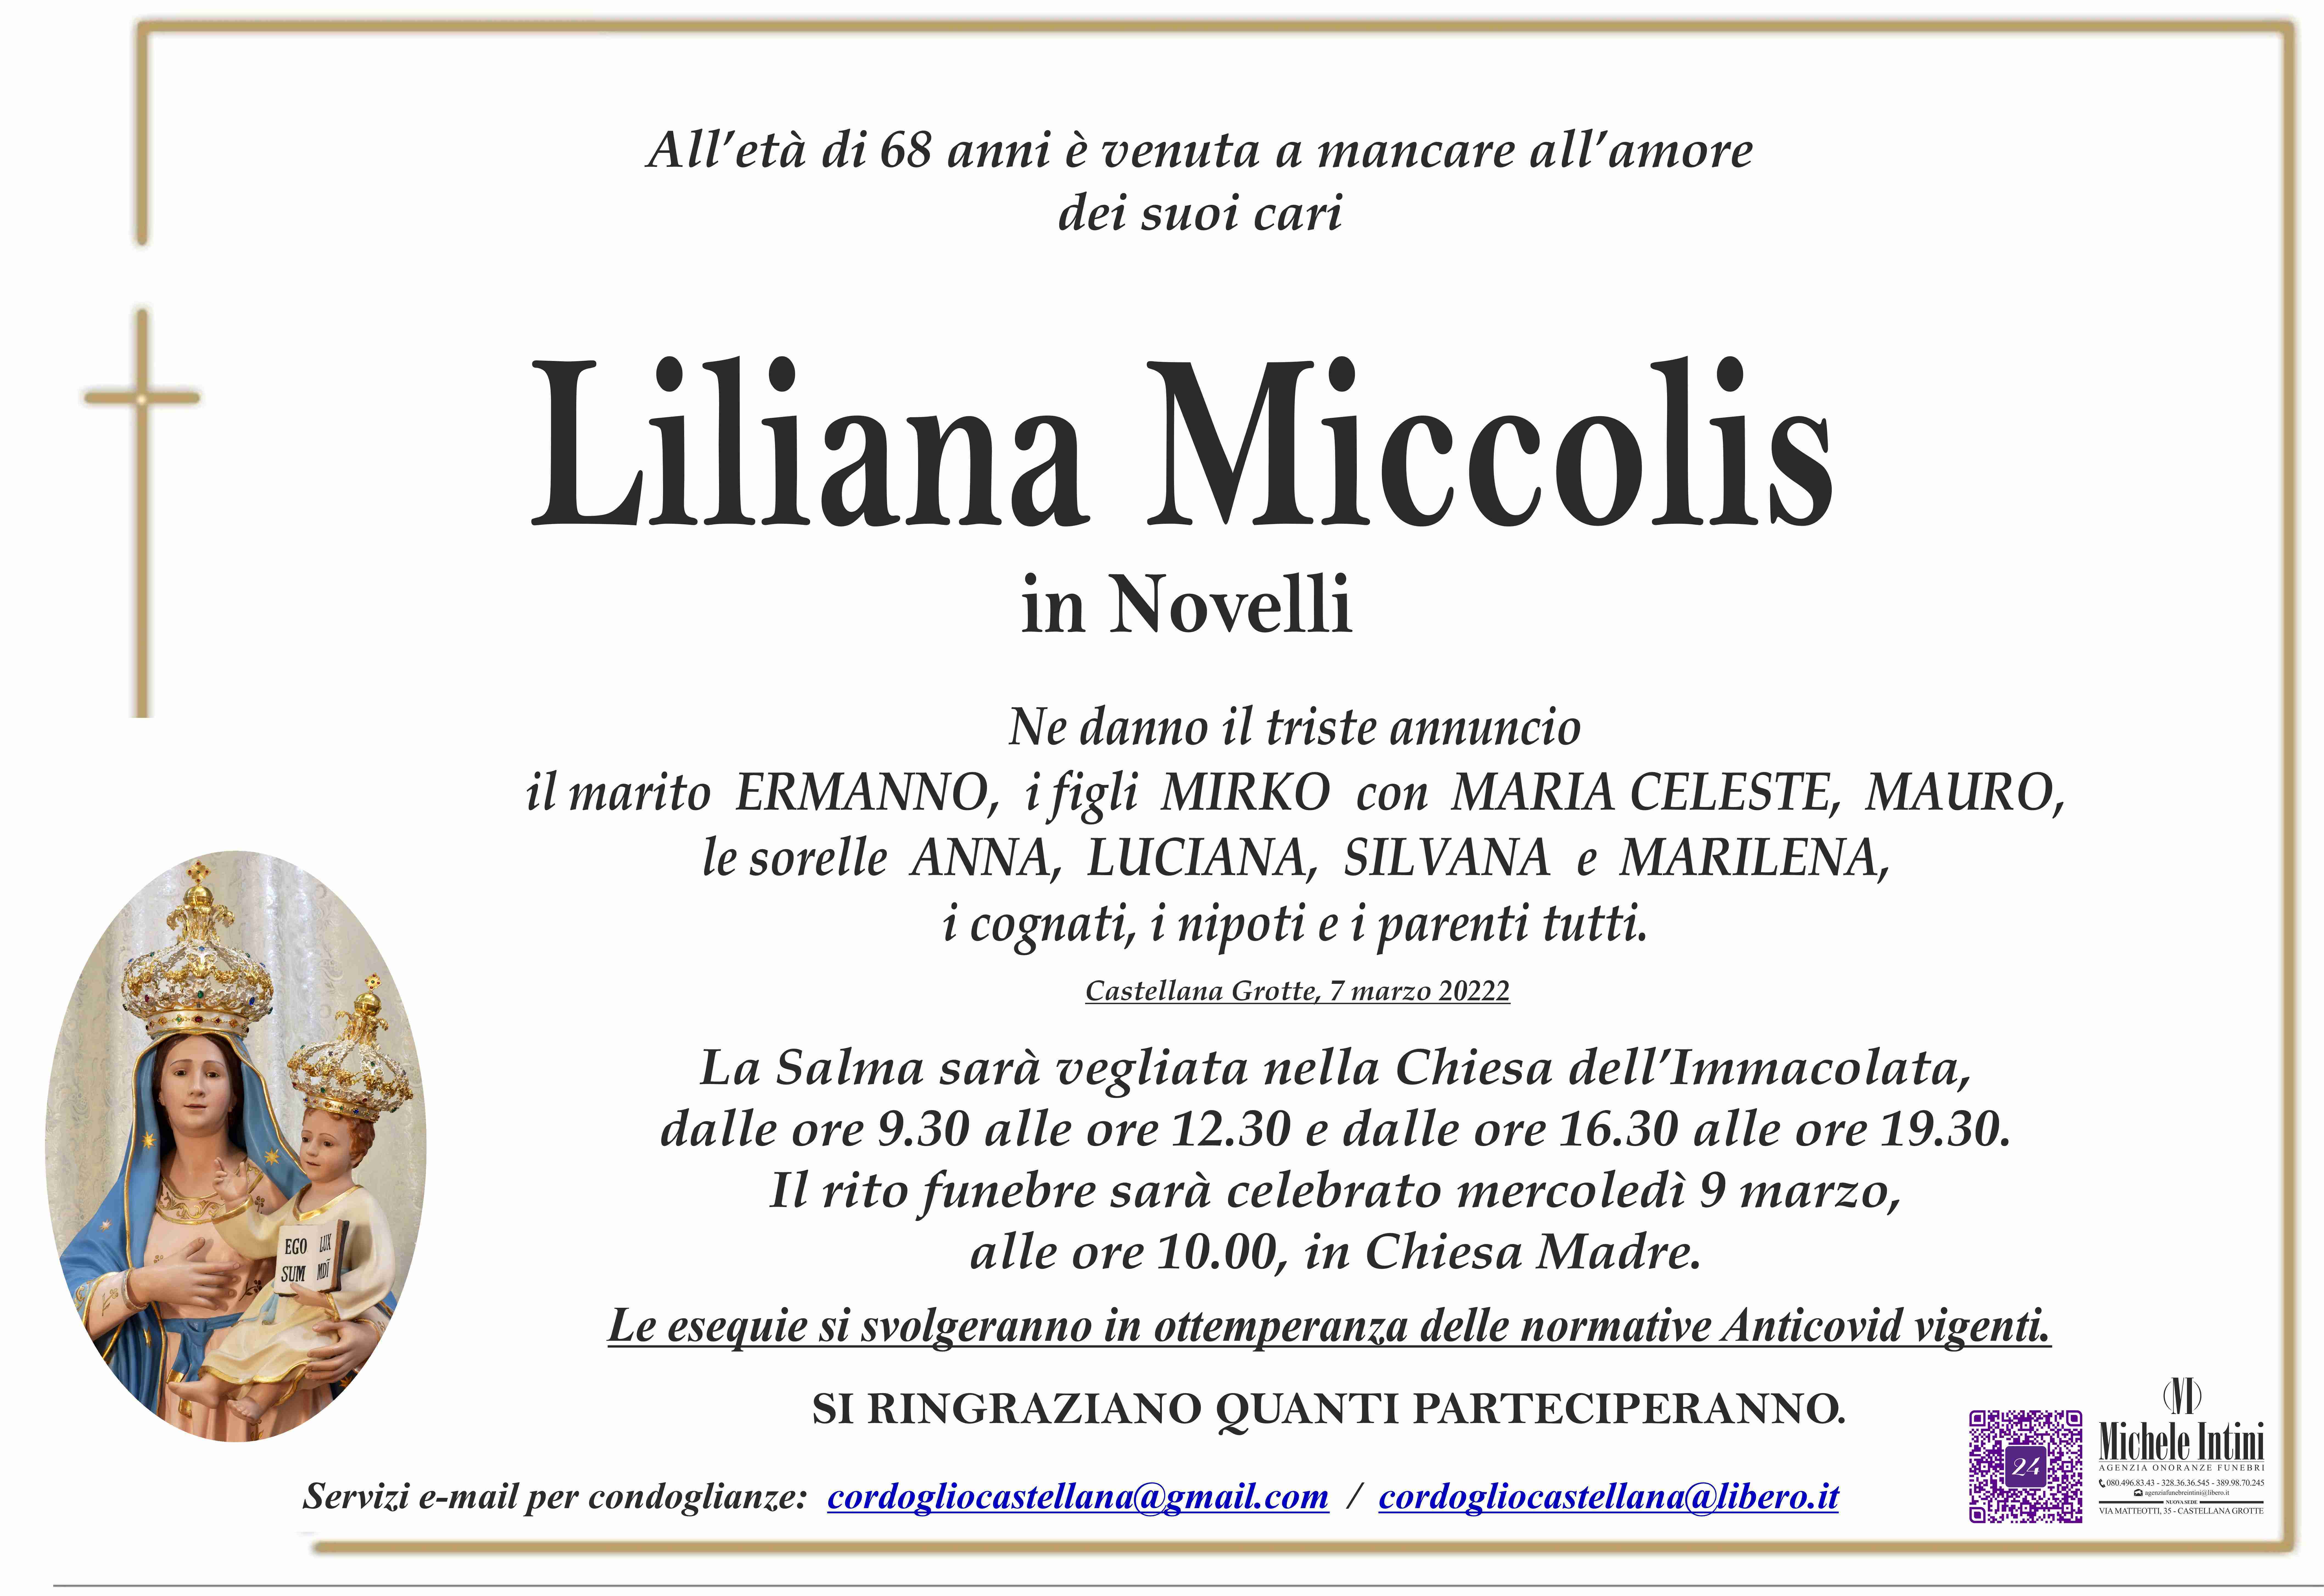 Liliana Miccolis